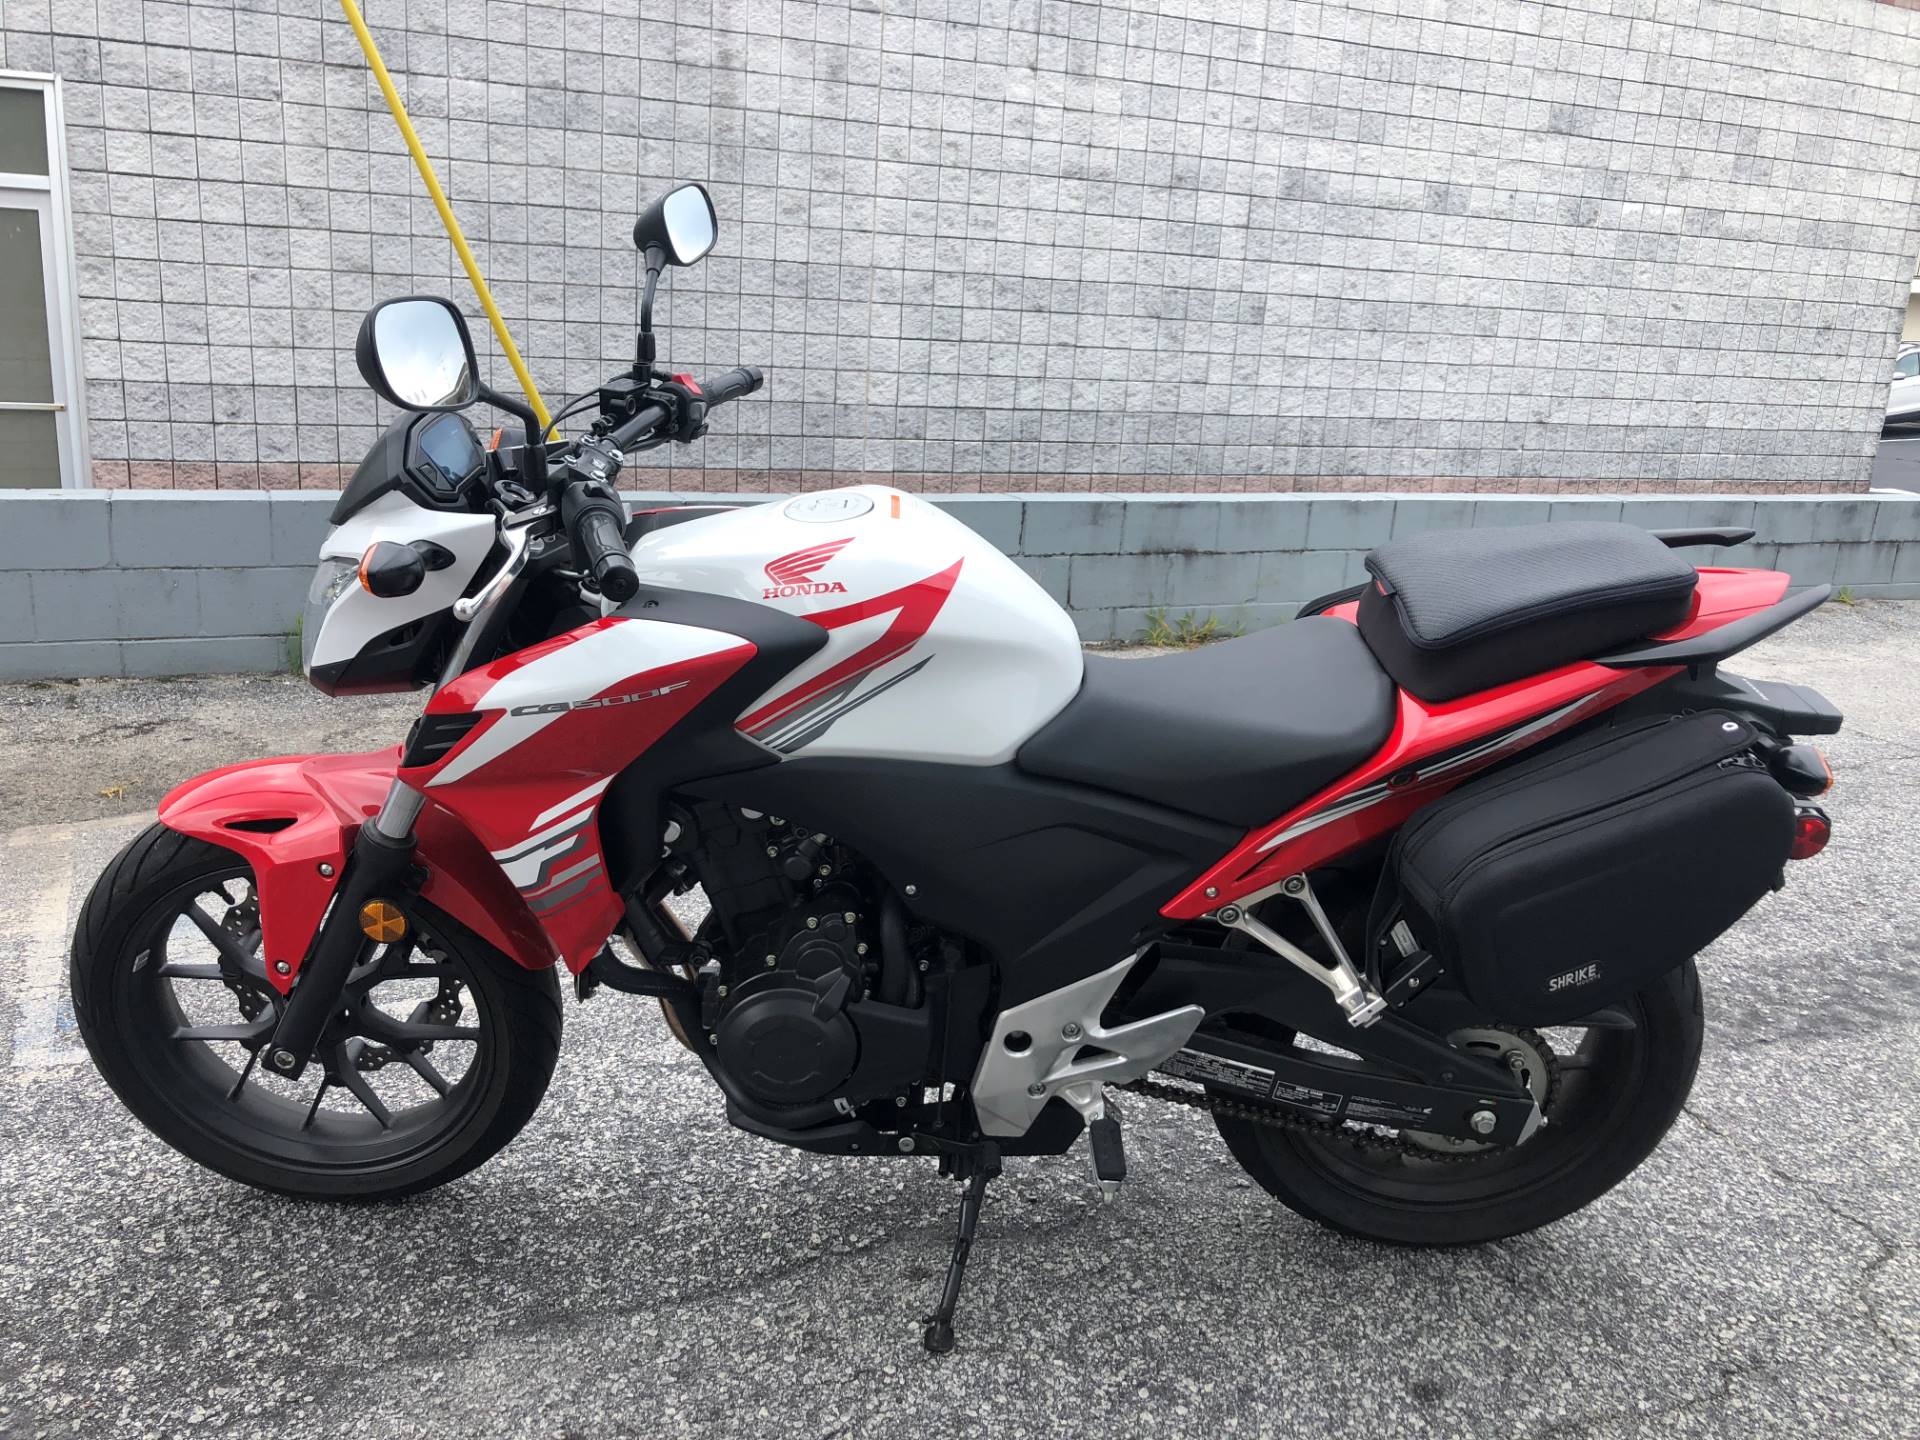 Used 2015 Honda CB500F Motorcycles in Greenville, SC